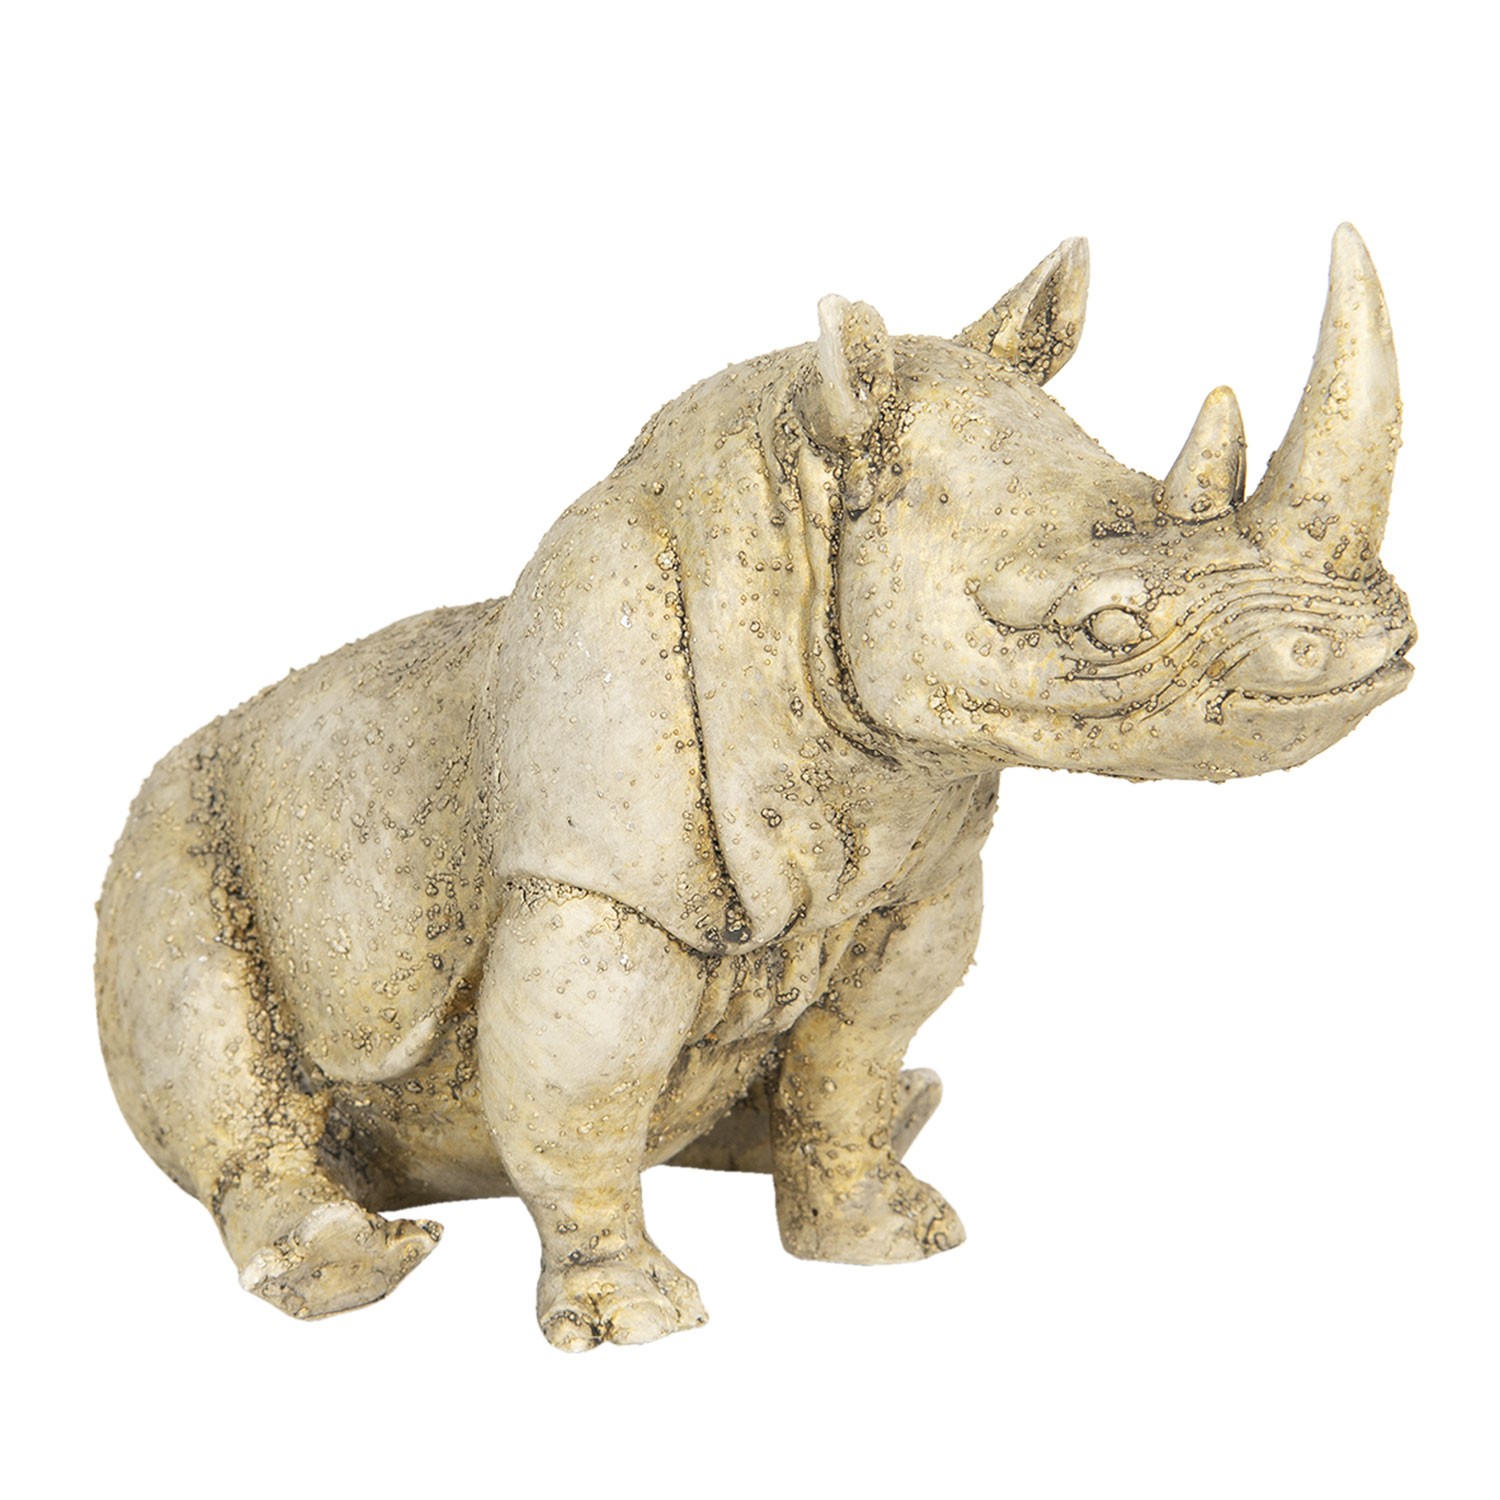 Dekorace nosorožce v antik vzhledu - 27*15*17 cm 6PR3199